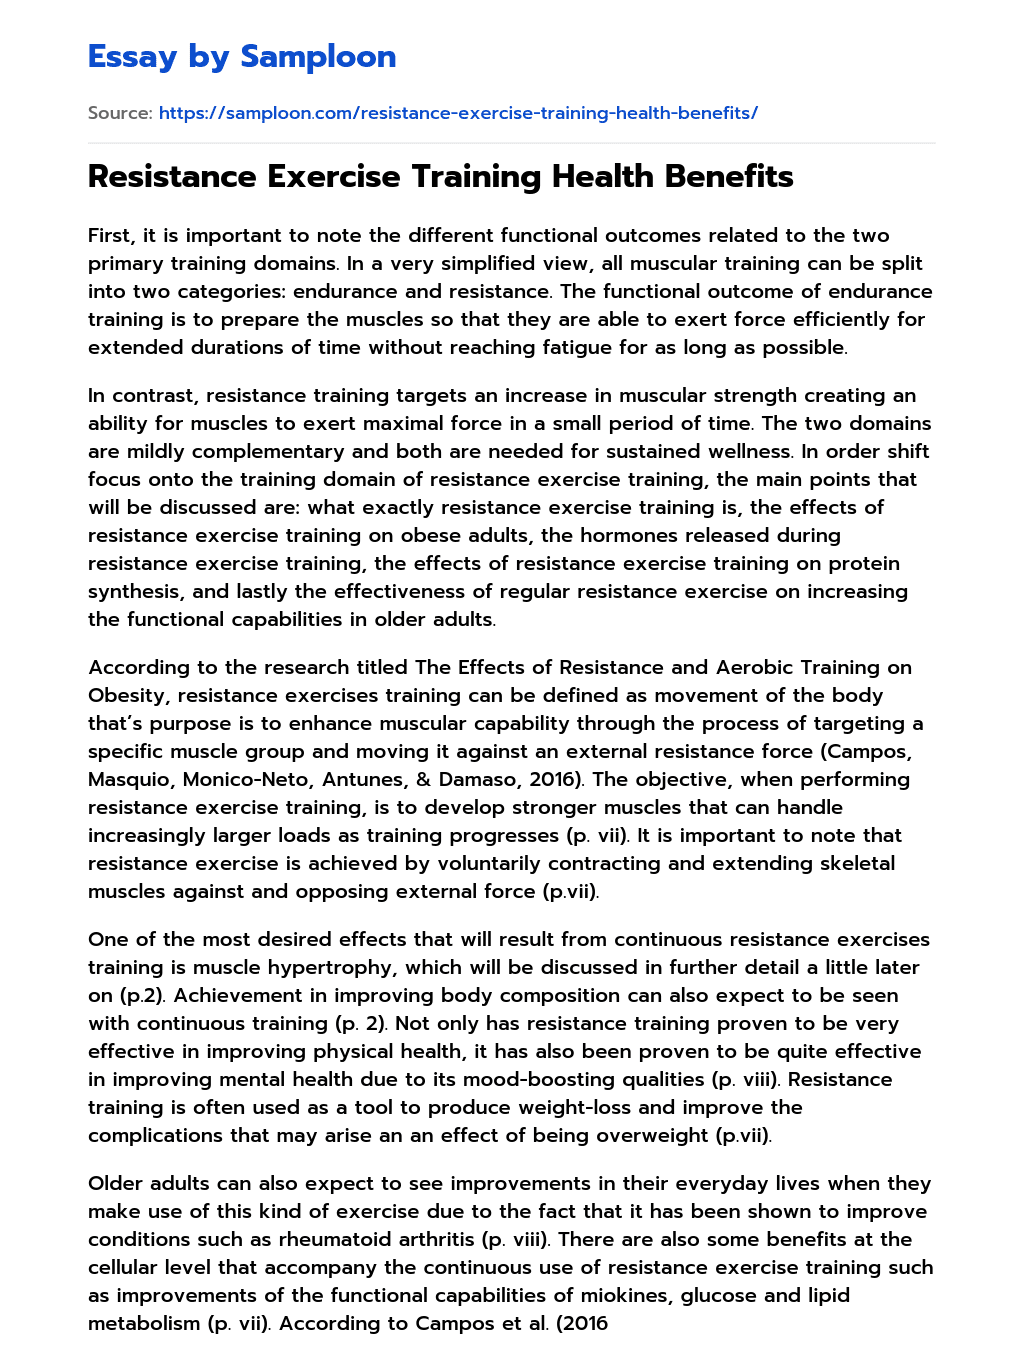 Resistance Exercise Training Health Benefits  essay